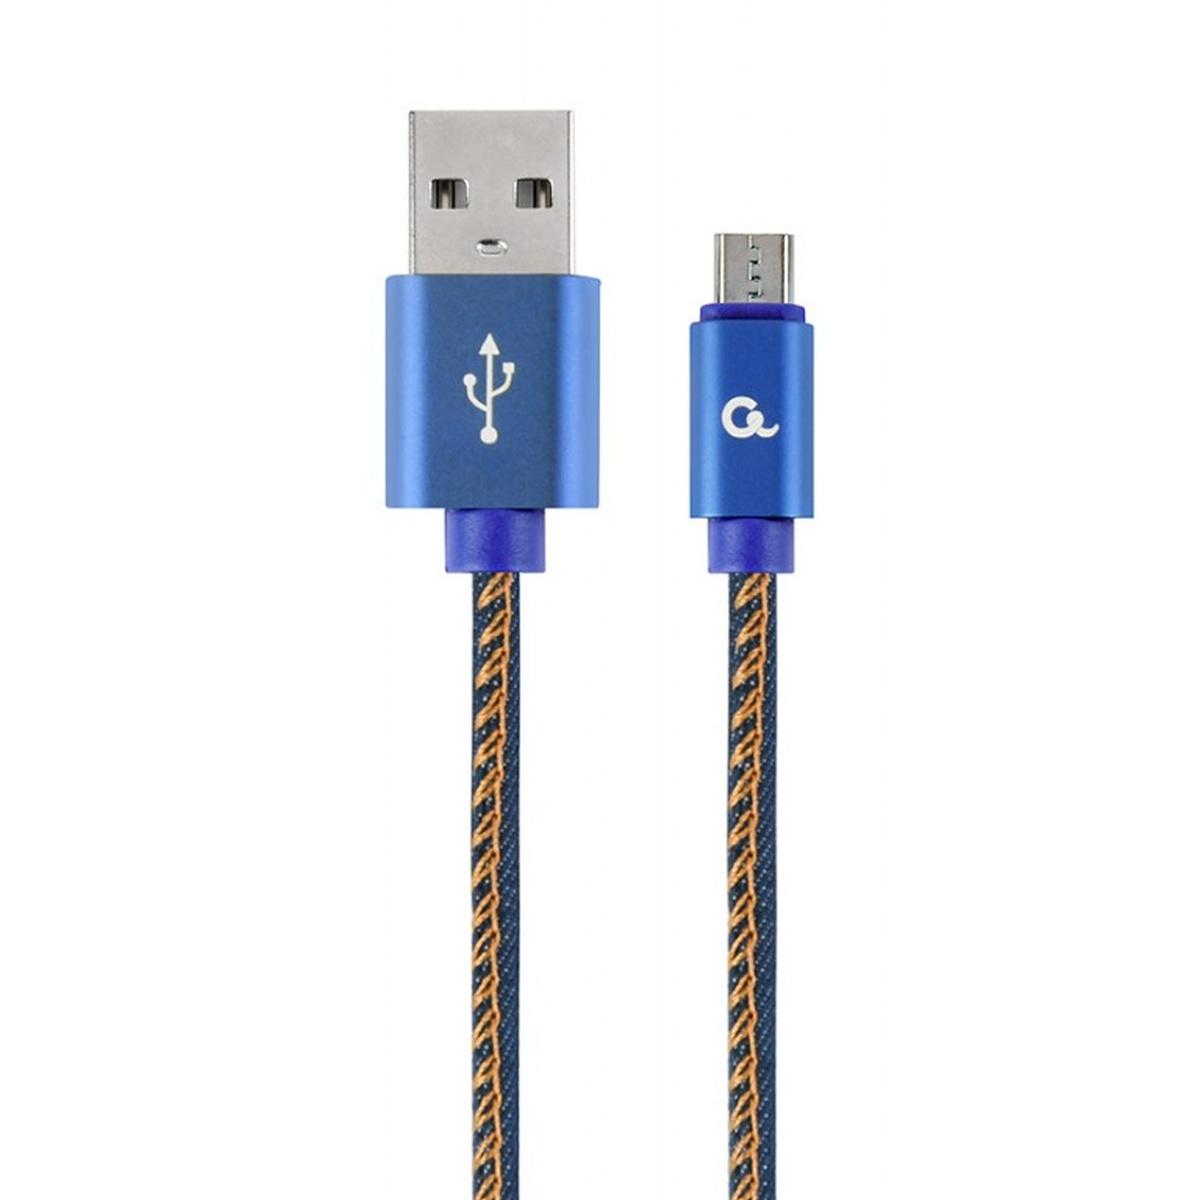 Gembird Premium jeans (denim) Micro-USB cable with metal connectors, 2m, blue<br />